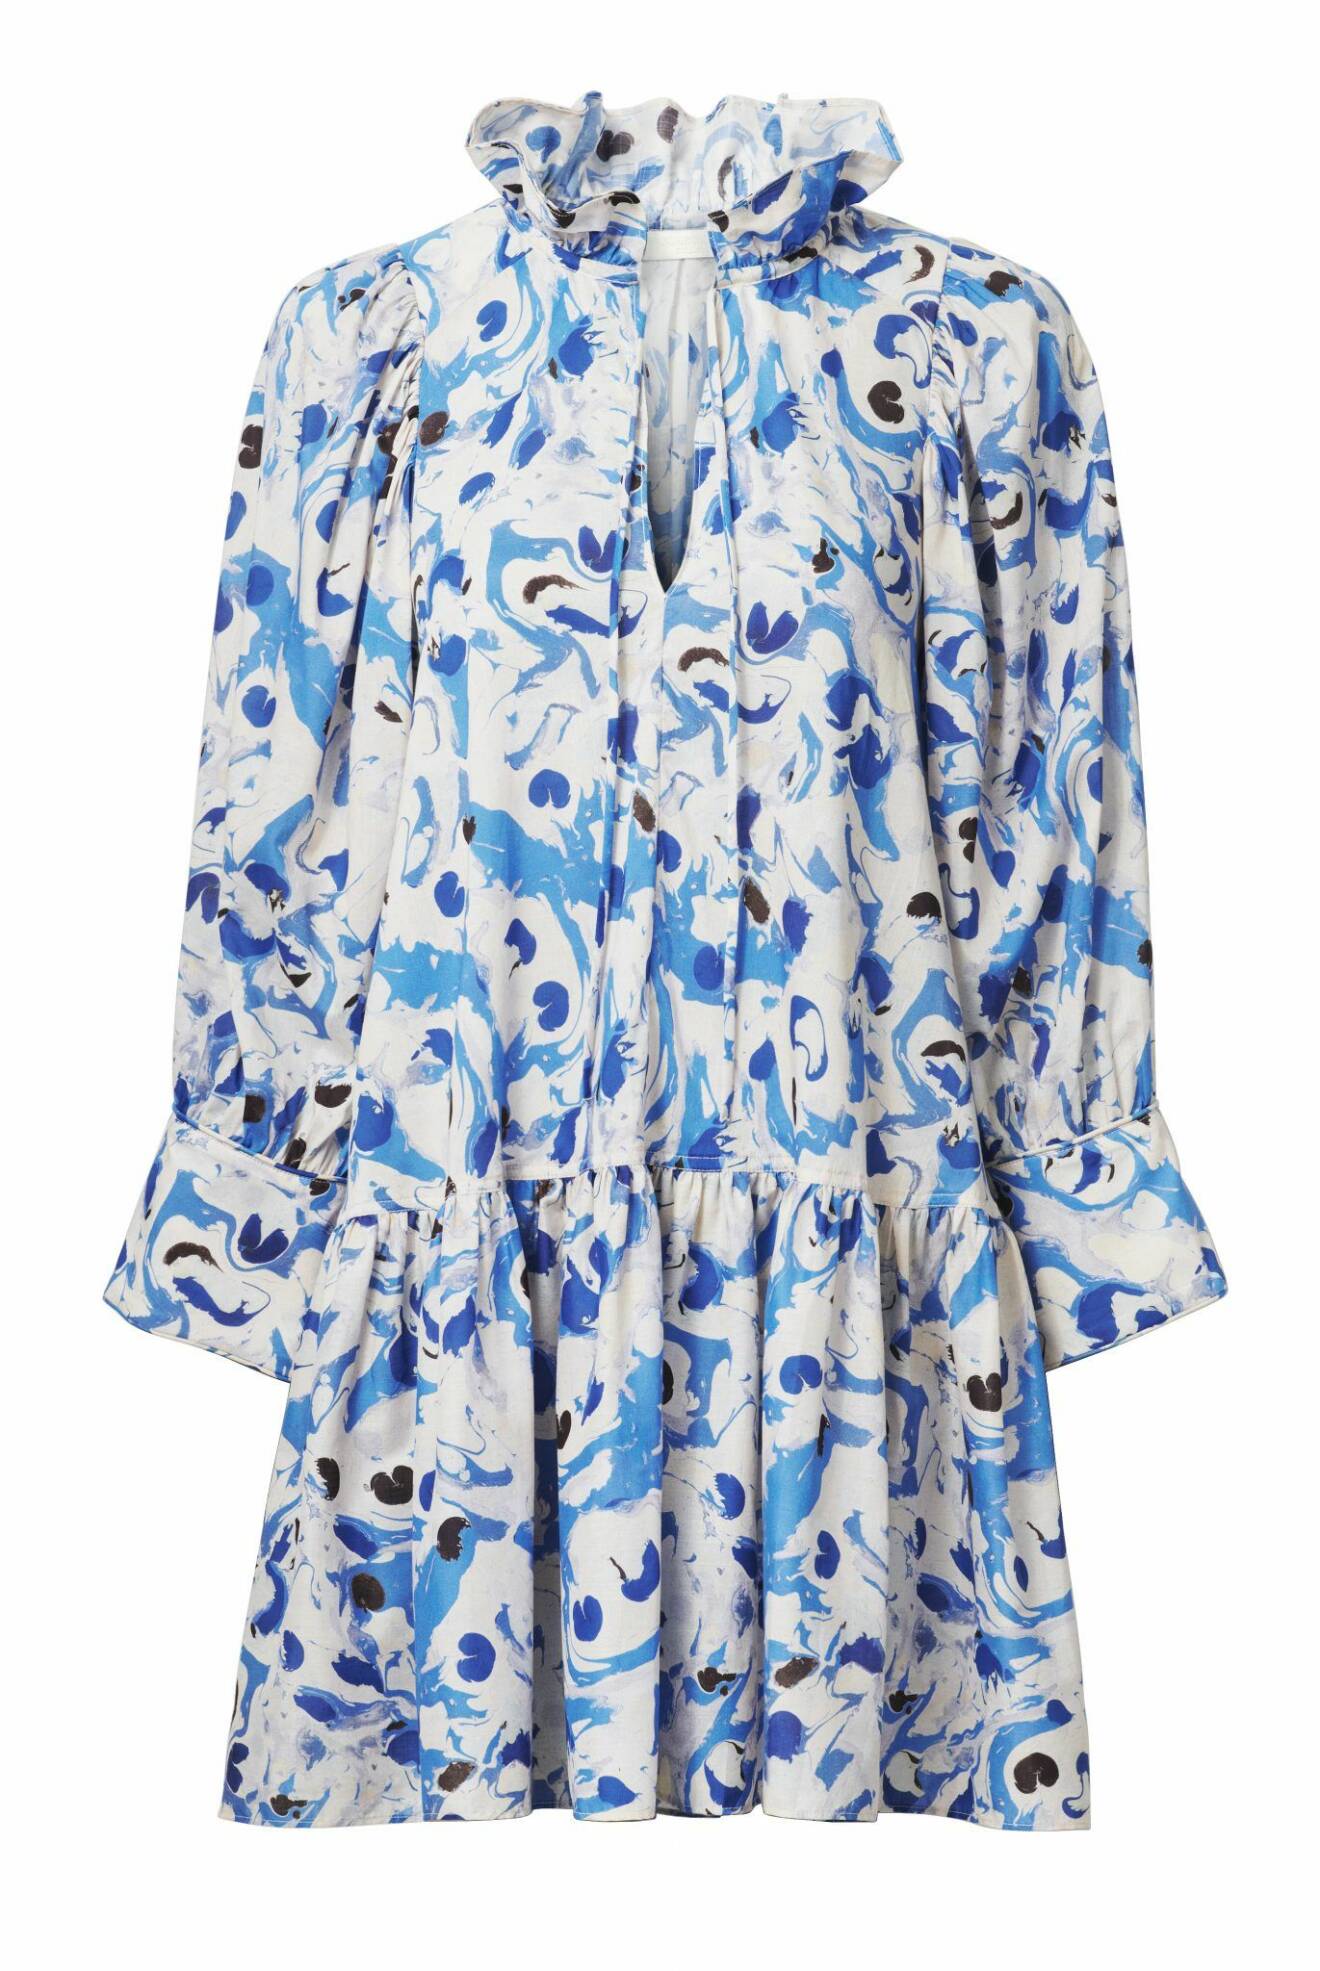 H&M Conscious Exclusive blåvit klänning